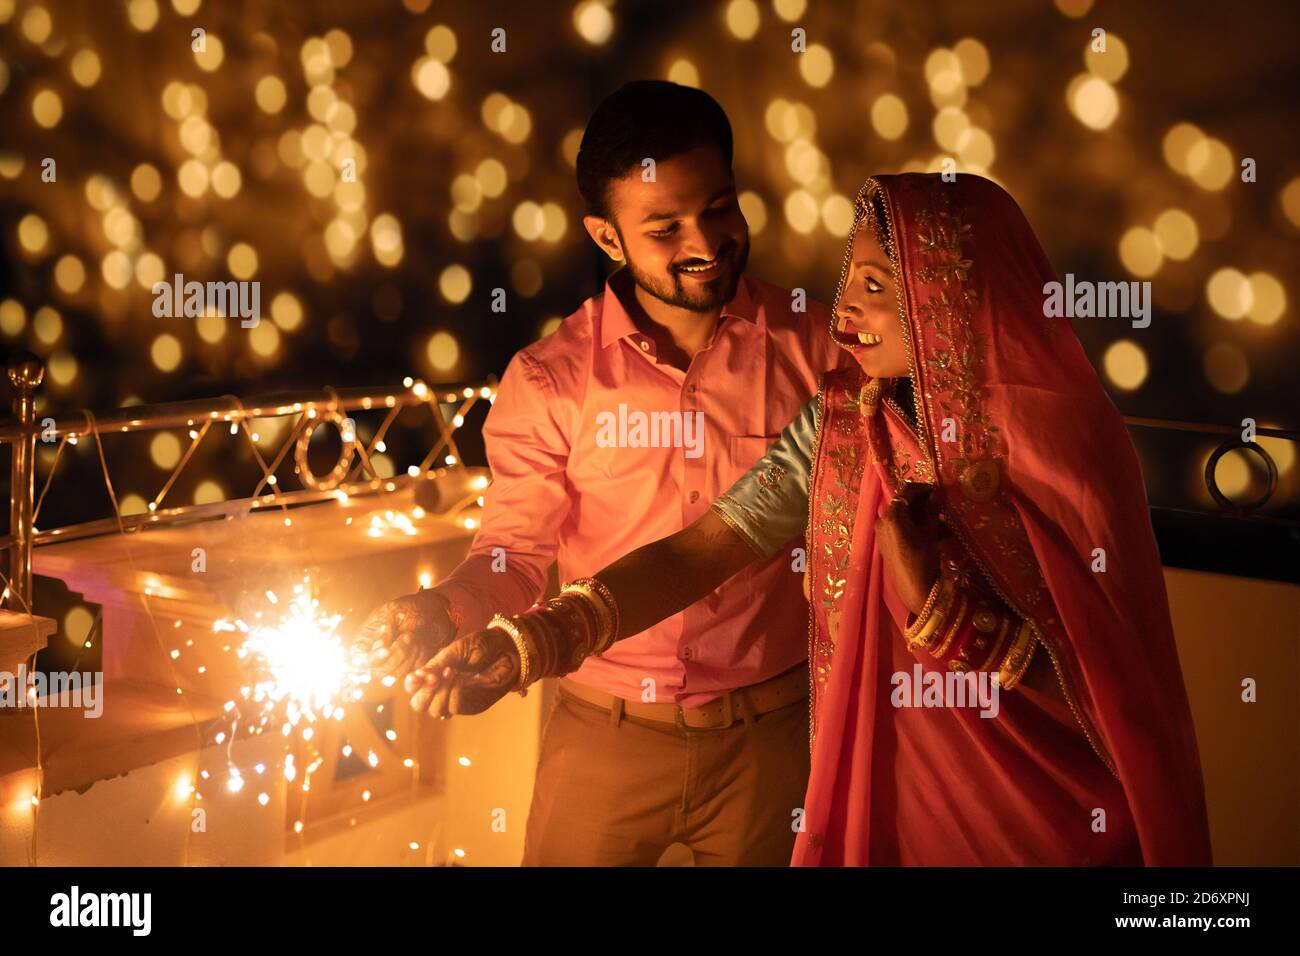 Couple | Indian wedding photography couples, Wedding photoshoot props,  Wedding couples photography